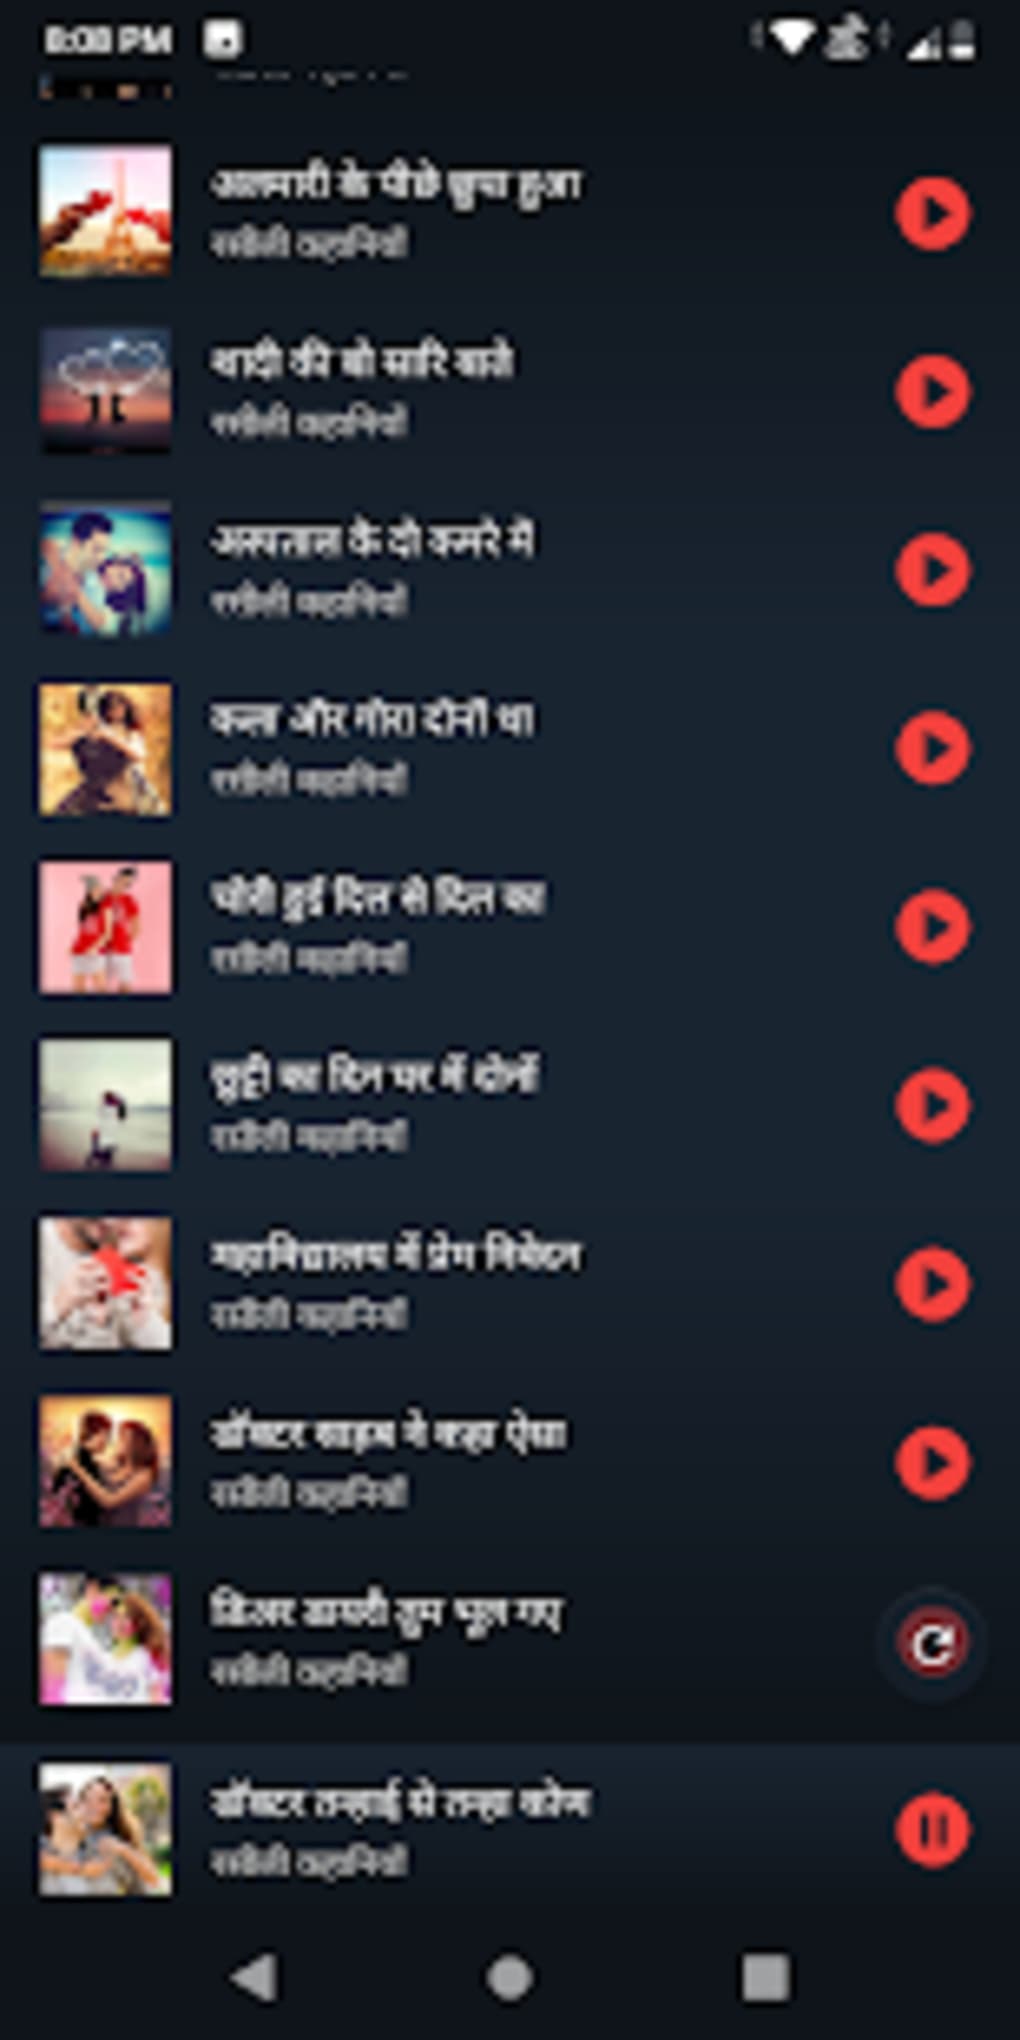 Desi Gandi Kahaniya - Hindi Desi Kahani Audio App for Android - Download